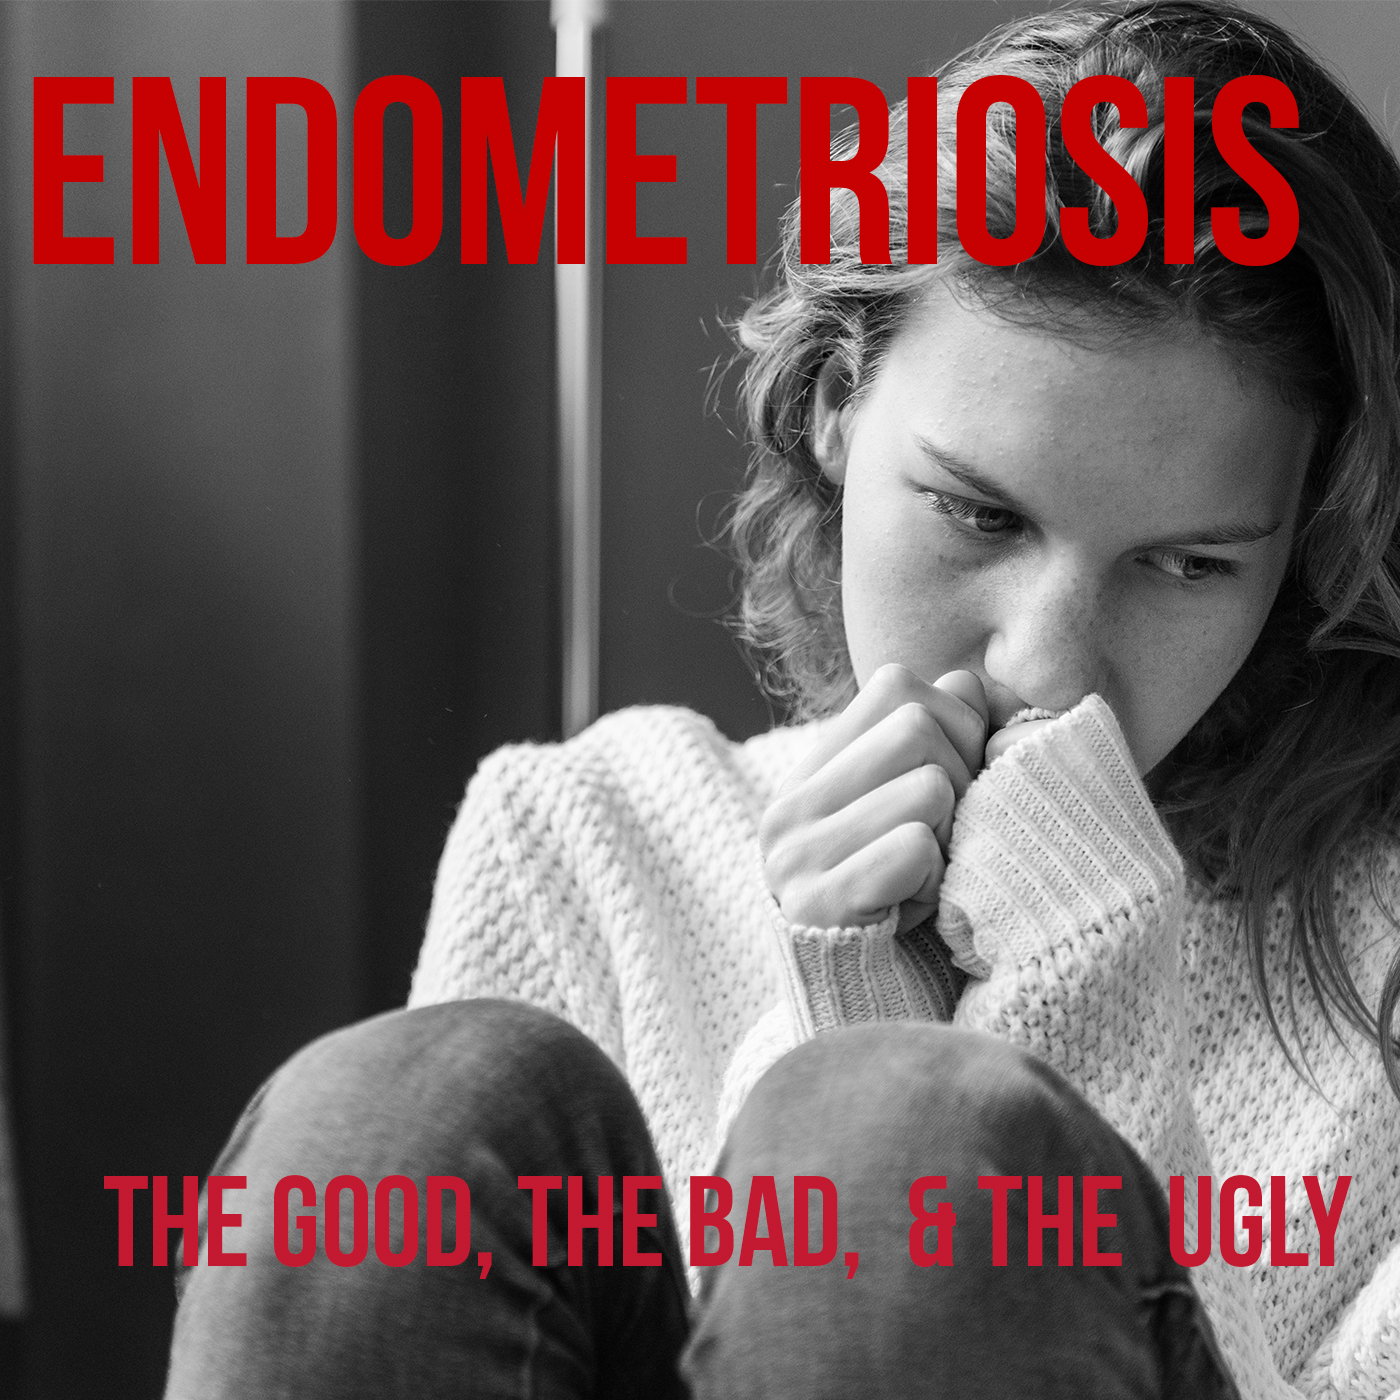 6.2 Endometriosis - the good, the bad, & the ugly